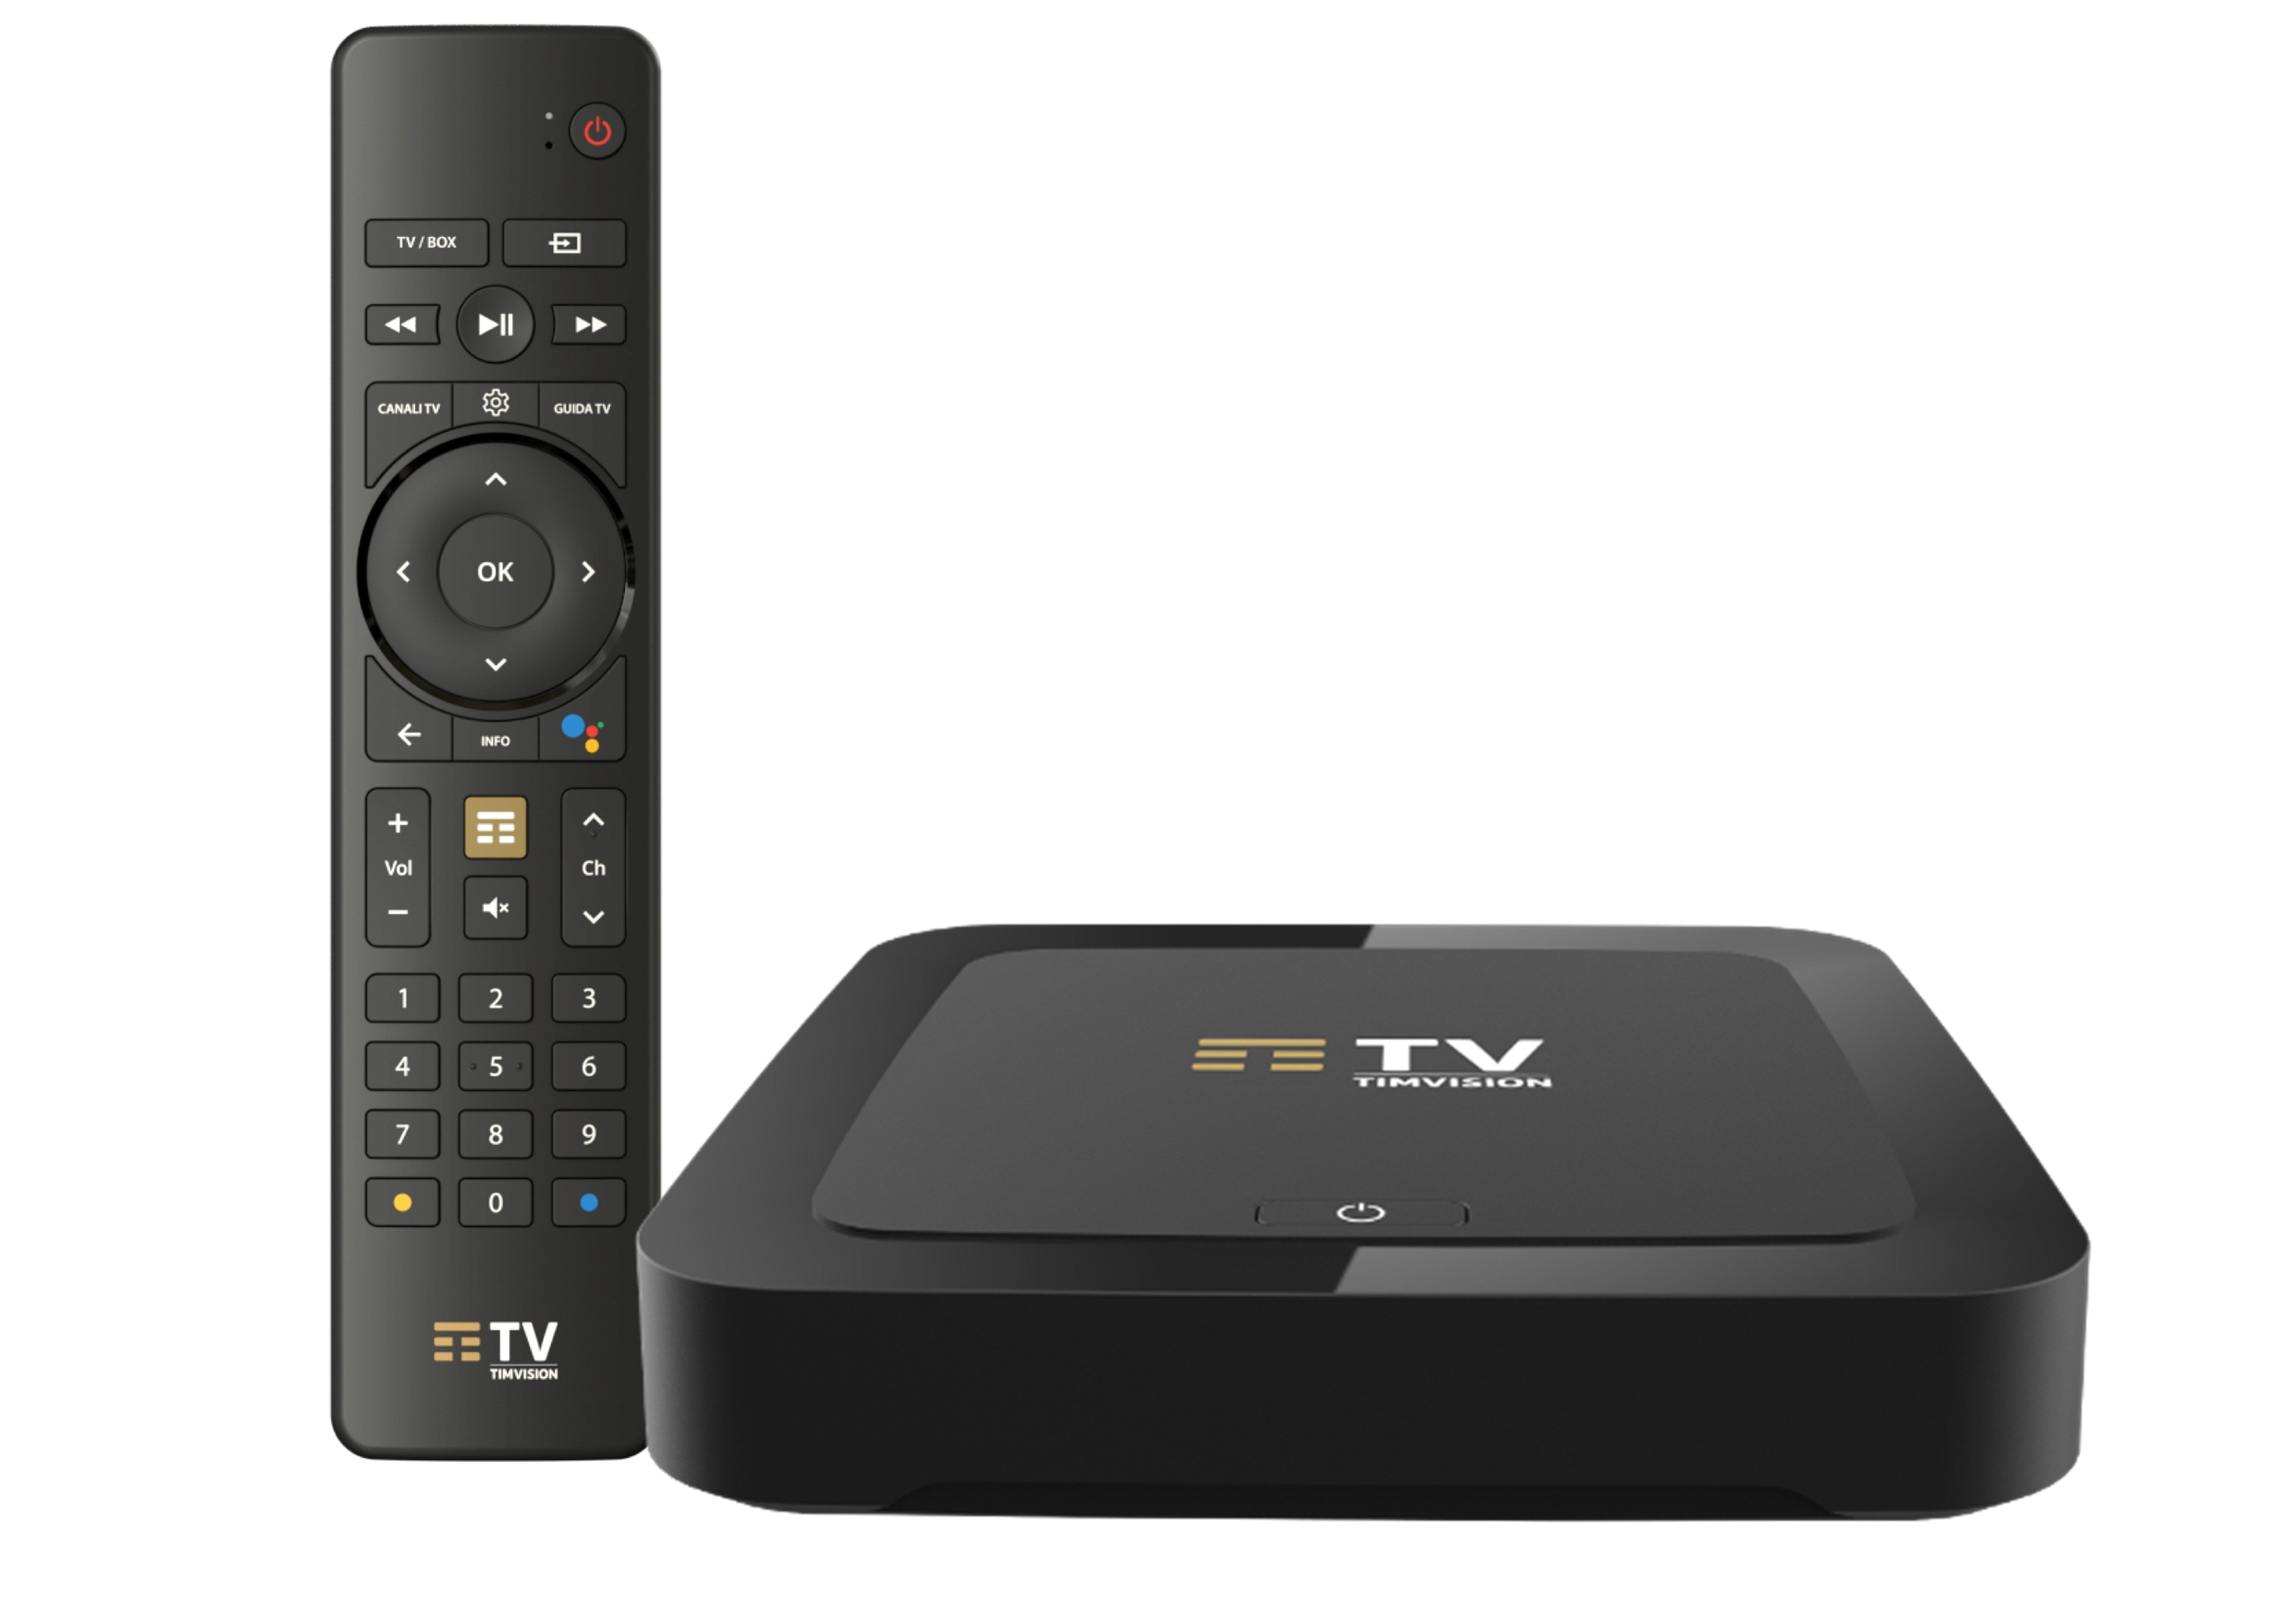 TIM TIMVISION Box Sagemcom Android TV HDMI DTIW3930 4K UHD WiFi6 Bluetooth + Telecomando